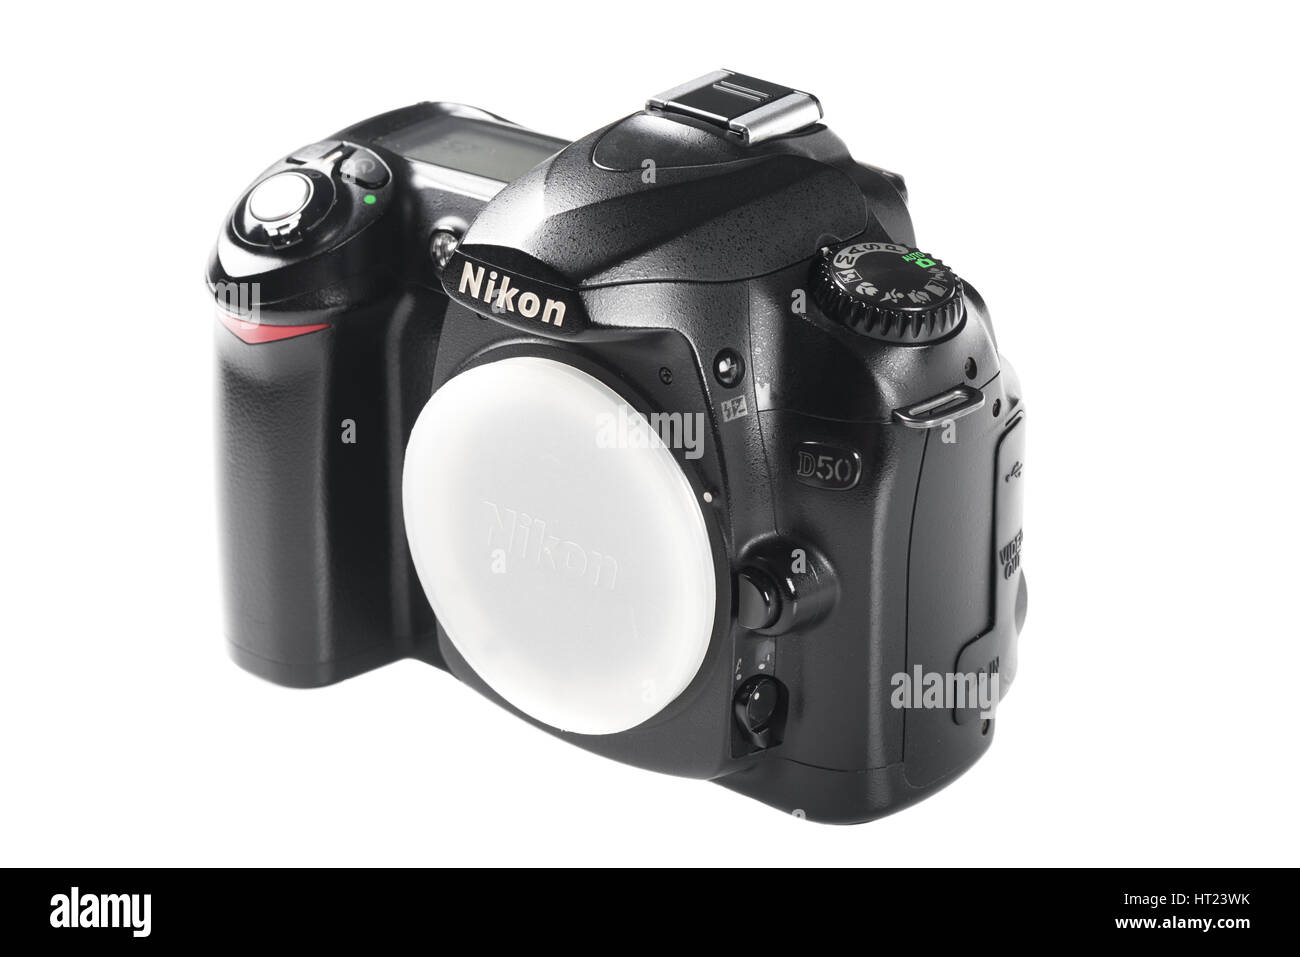 BANGKOK, THAILAND - SEPTEMBER 30, 2014: Nikon D50 camera body, the digital SLR made by nikon. Stock Photo